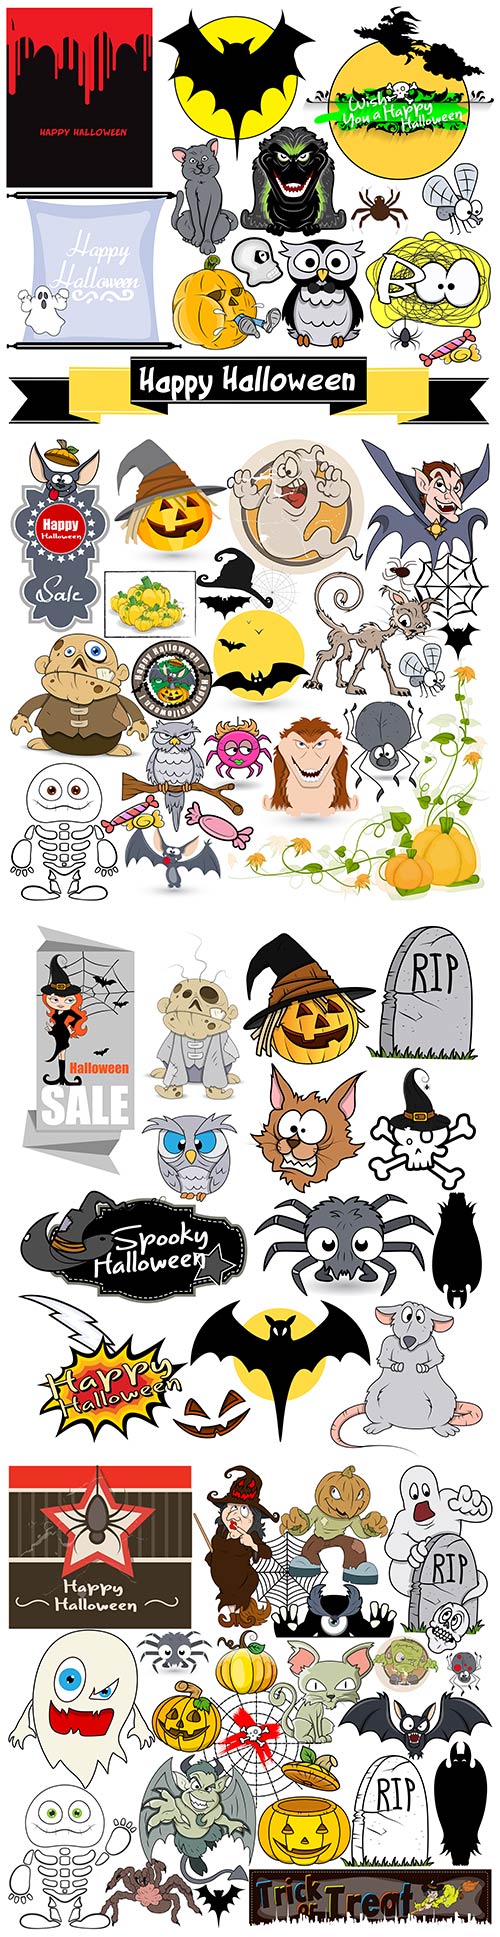 Halloween cartoon characters vector illustration